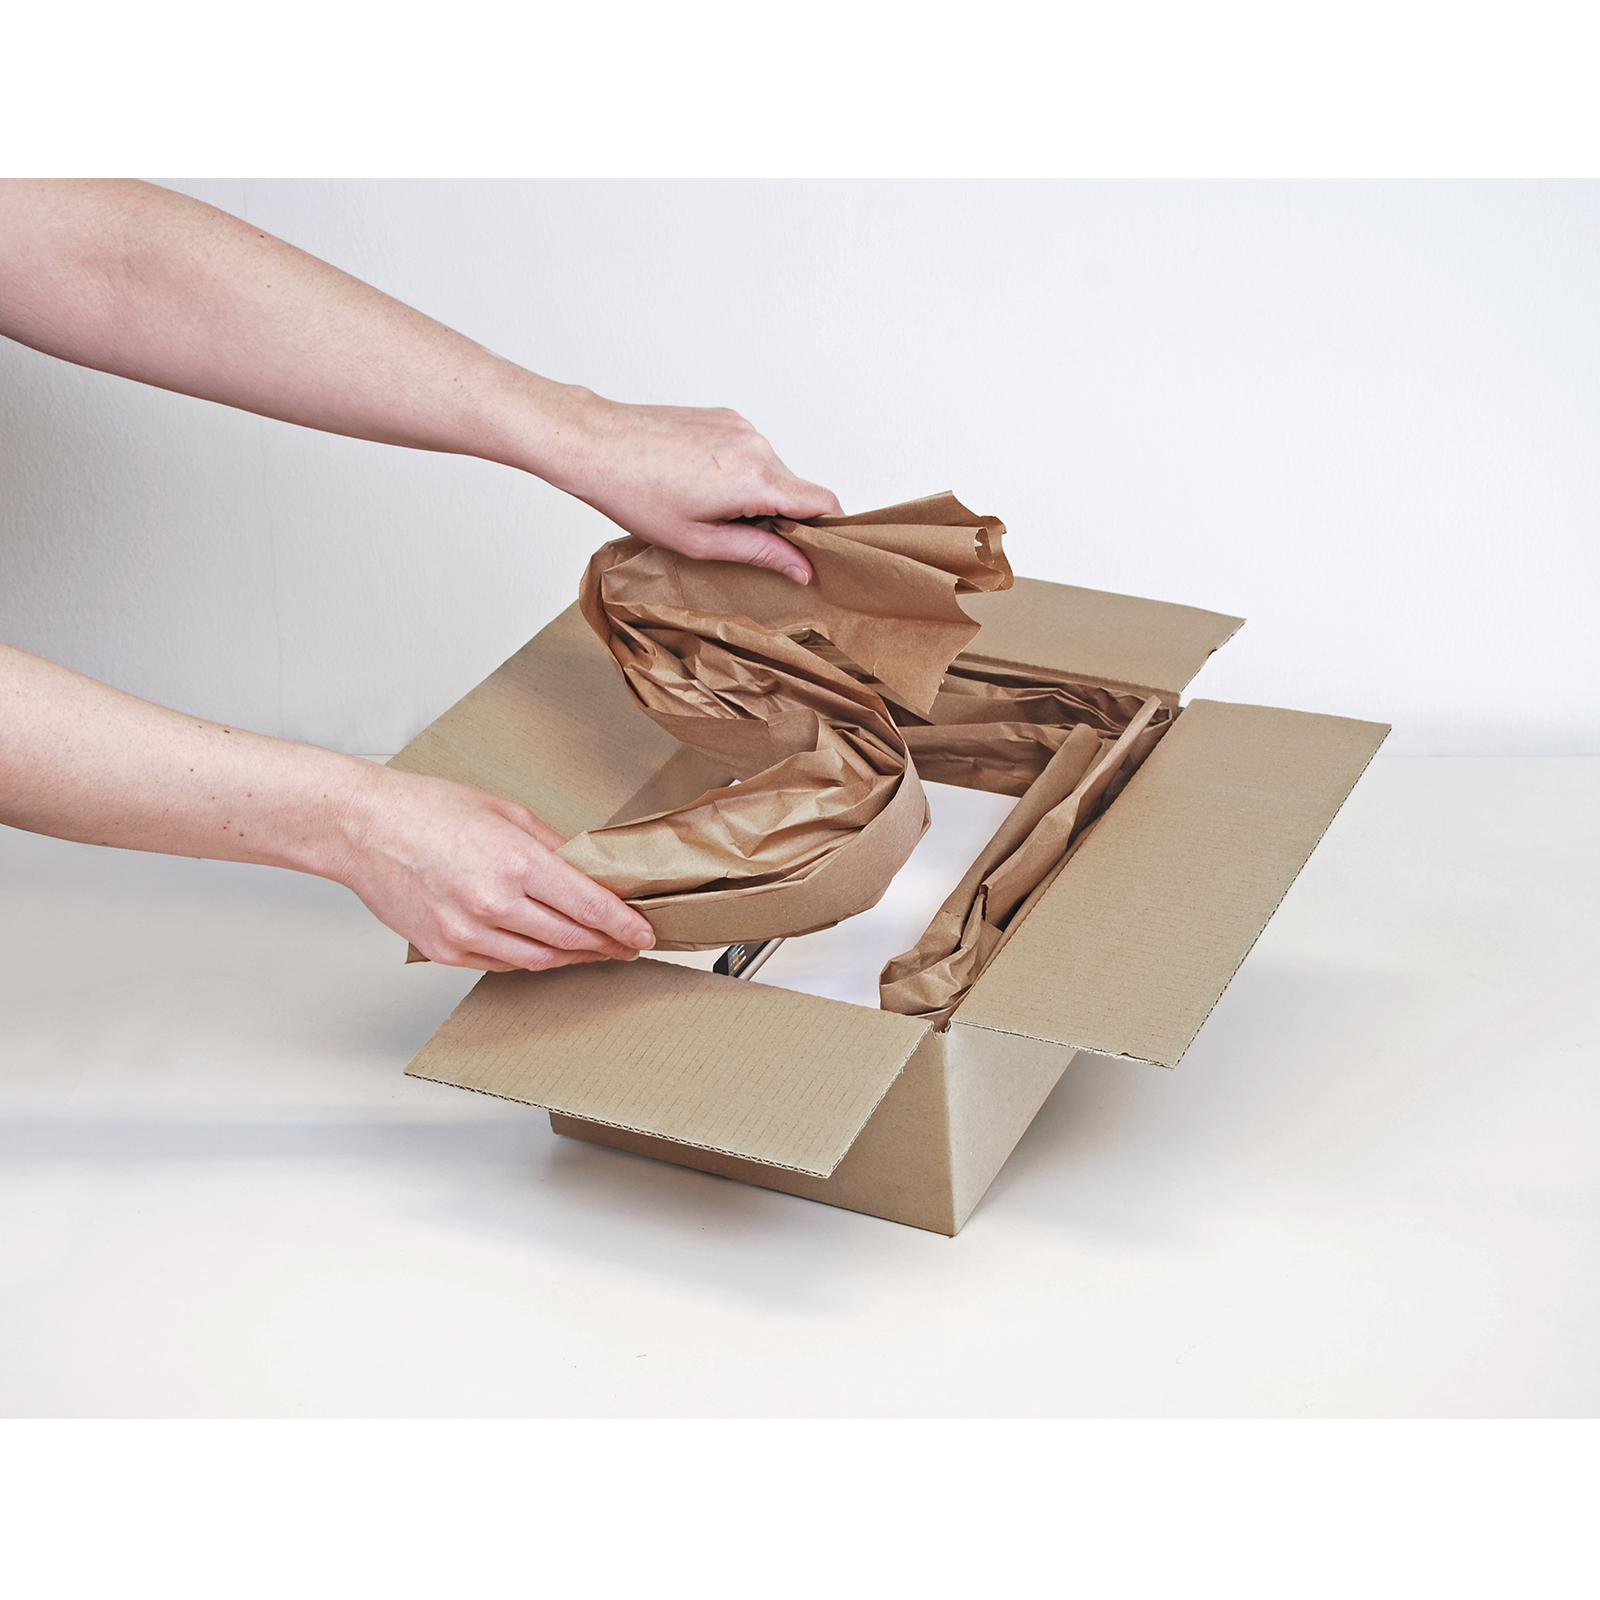 Recycling Packpapier Spenderbox 38 cm x 360 m - Ranpak FillPak Go